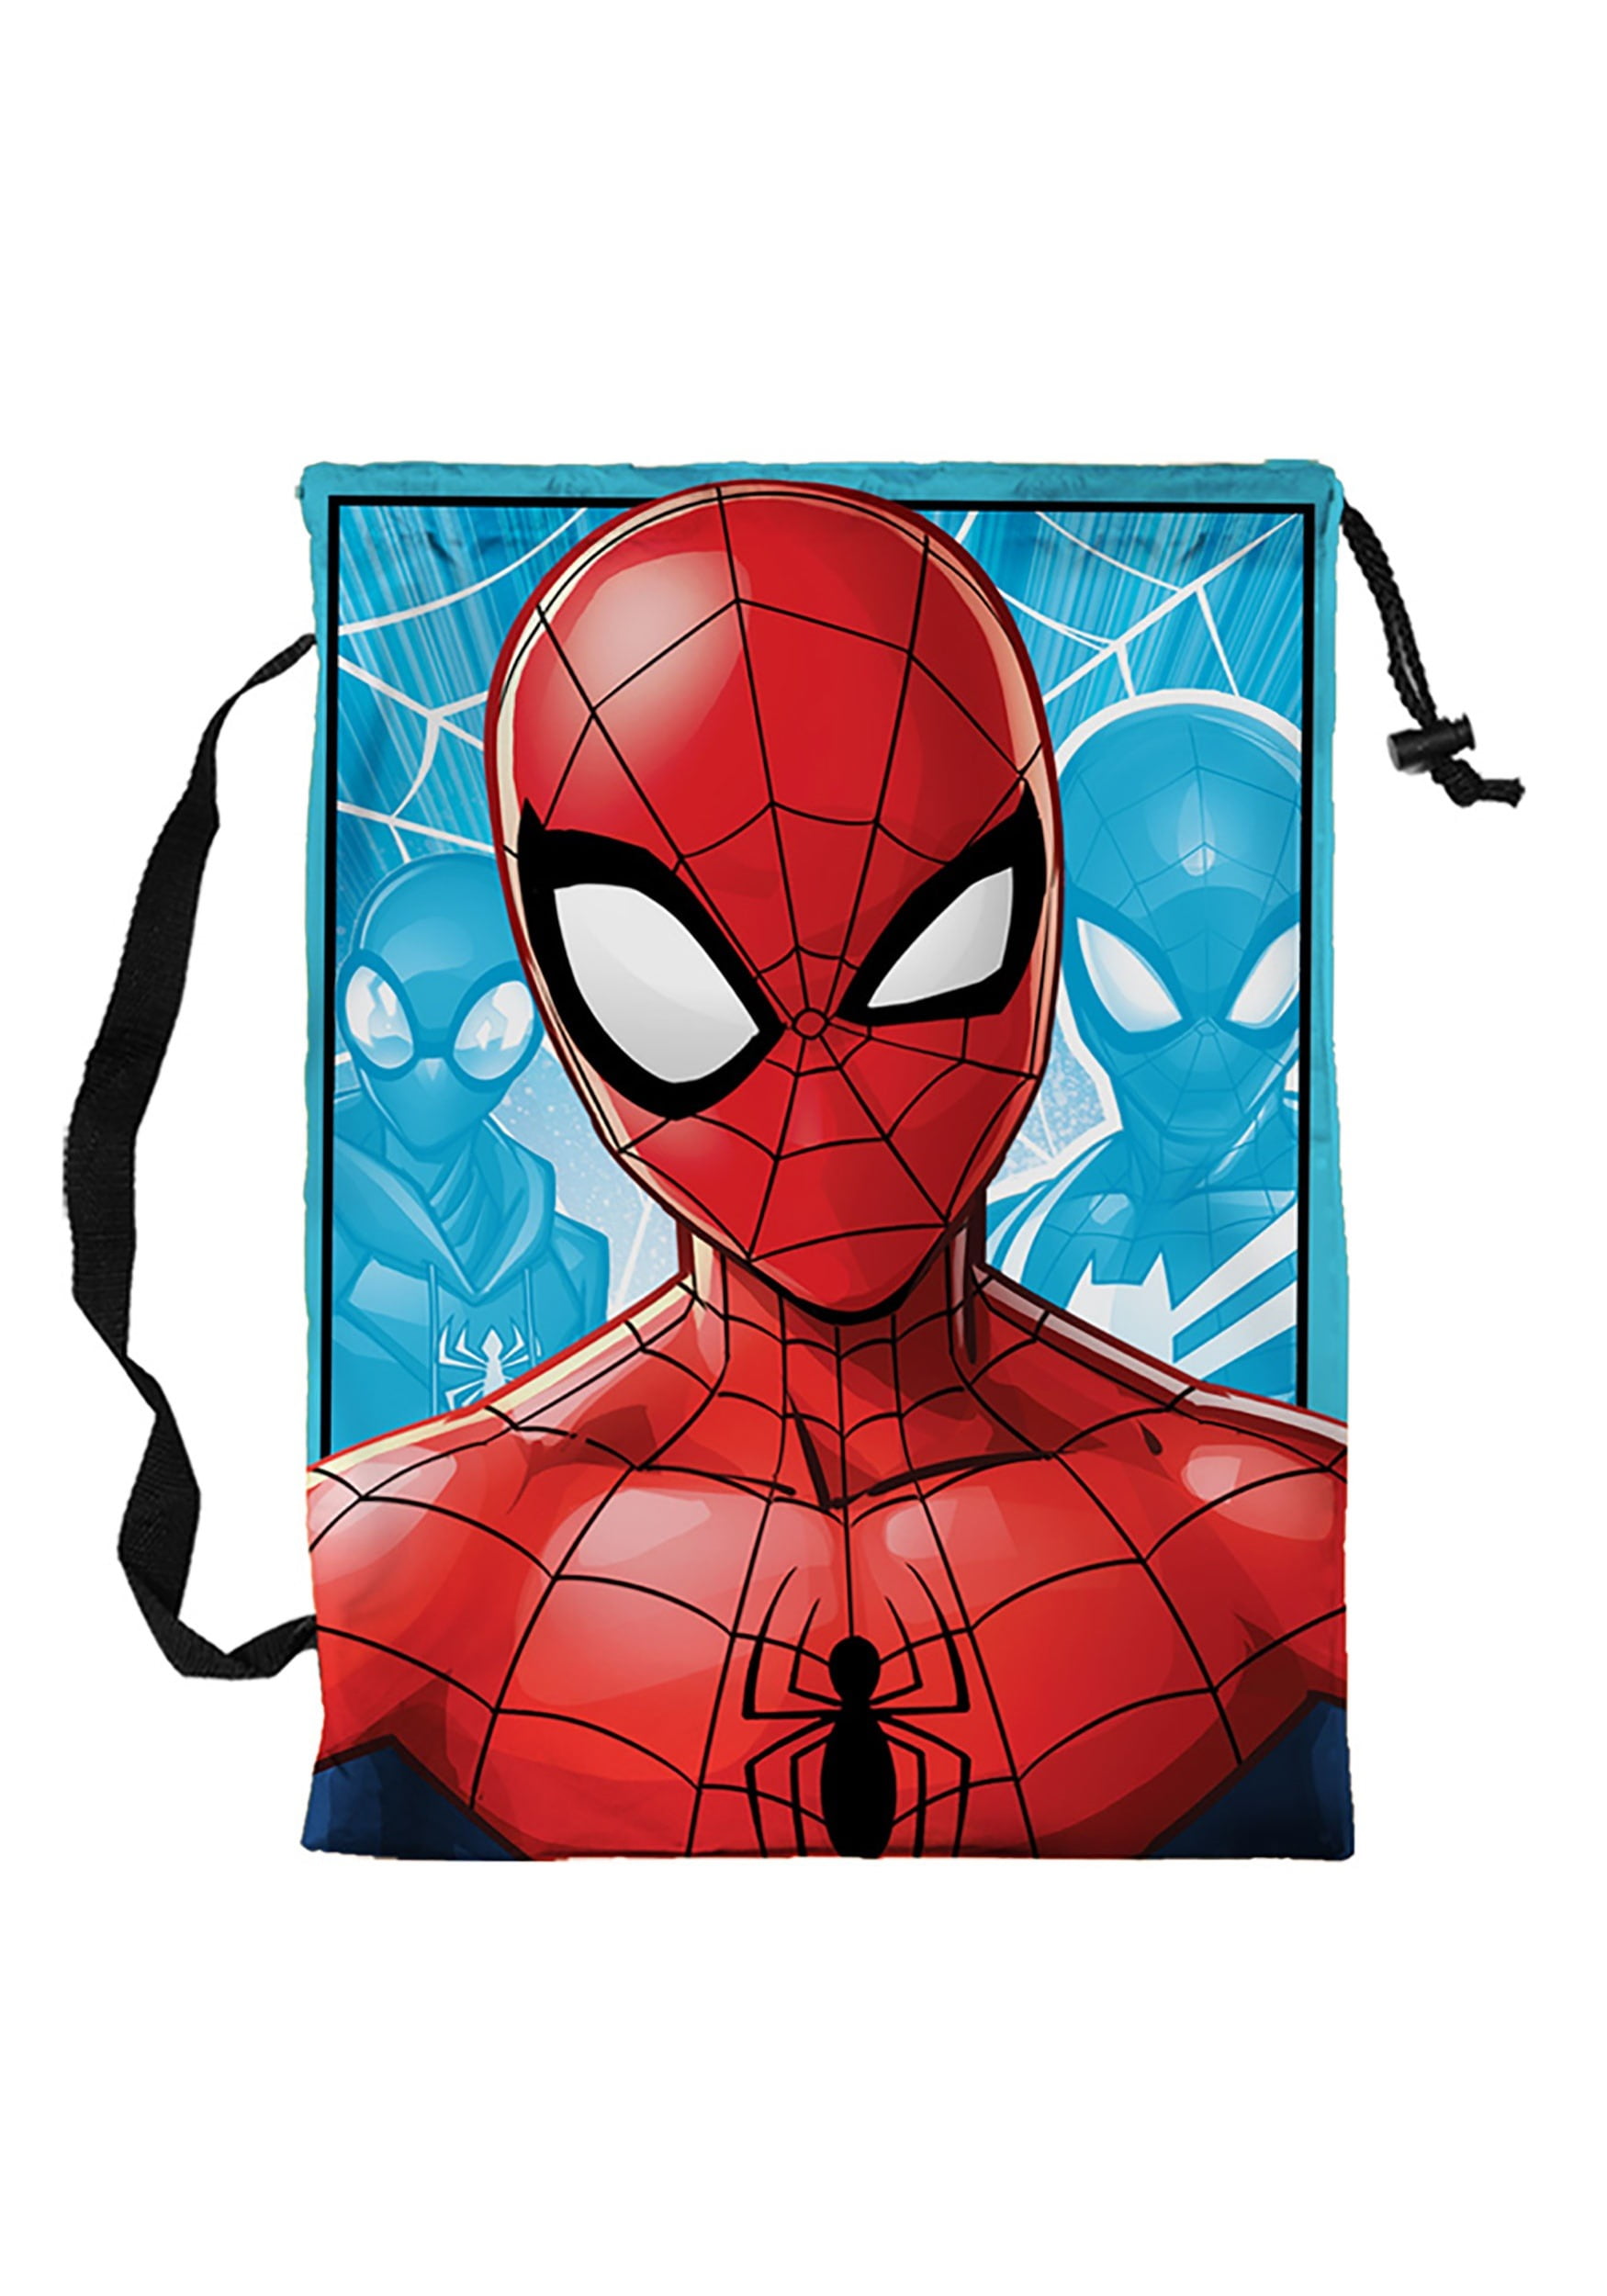 Spiderman Pillow Case Treat Bag Walmart Canada